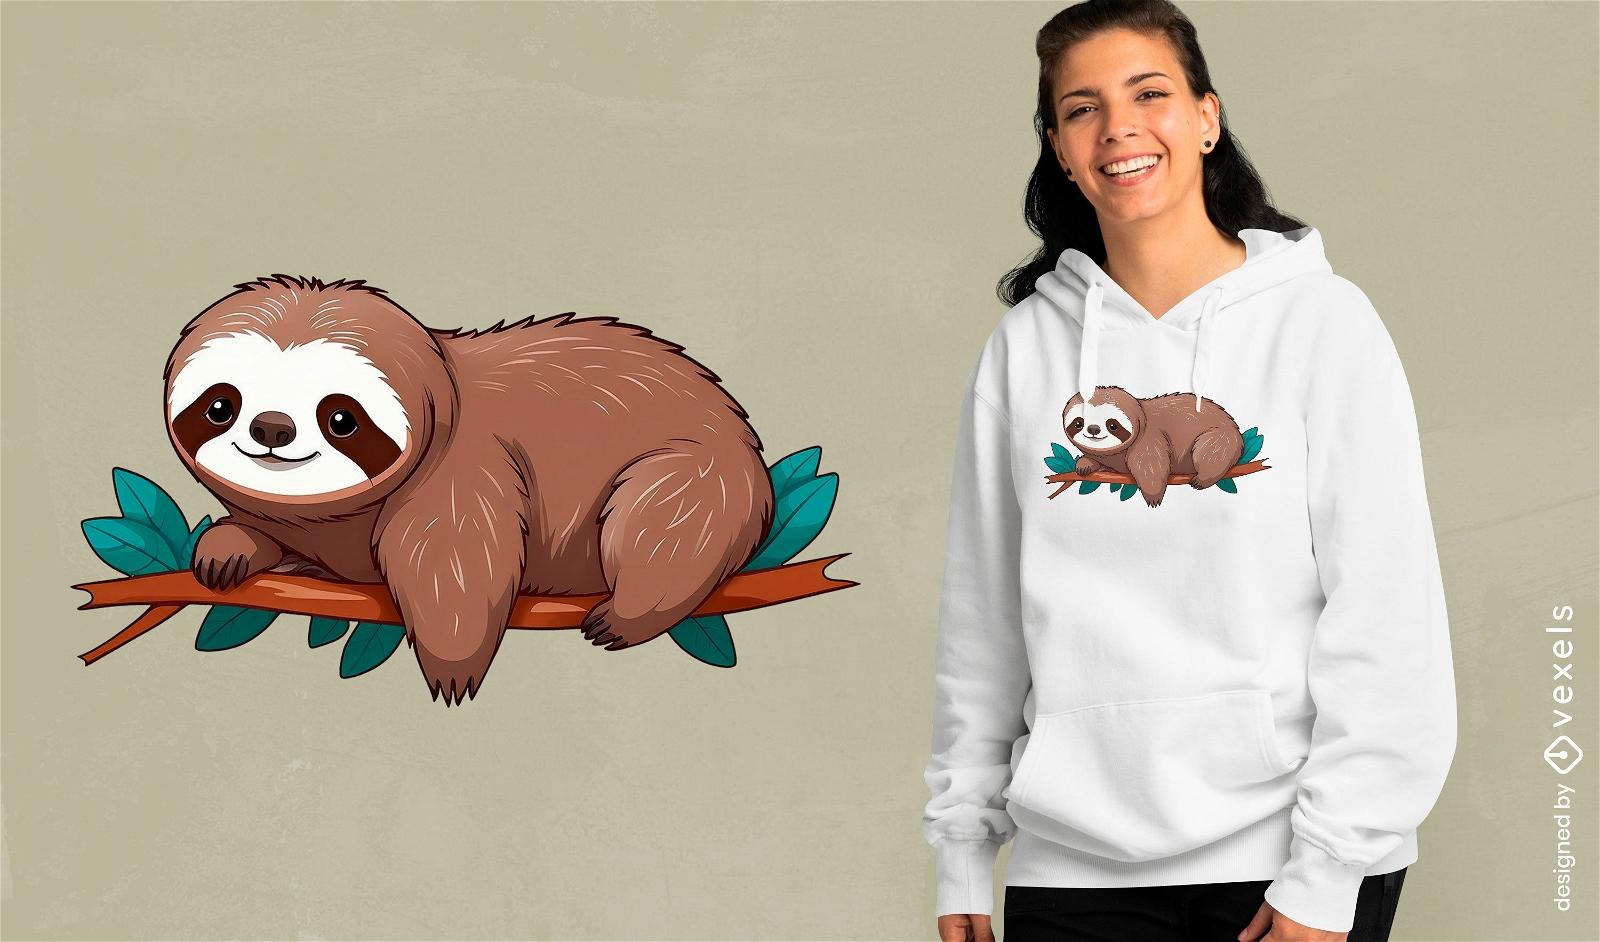 Cute resting sloth t-shirt design